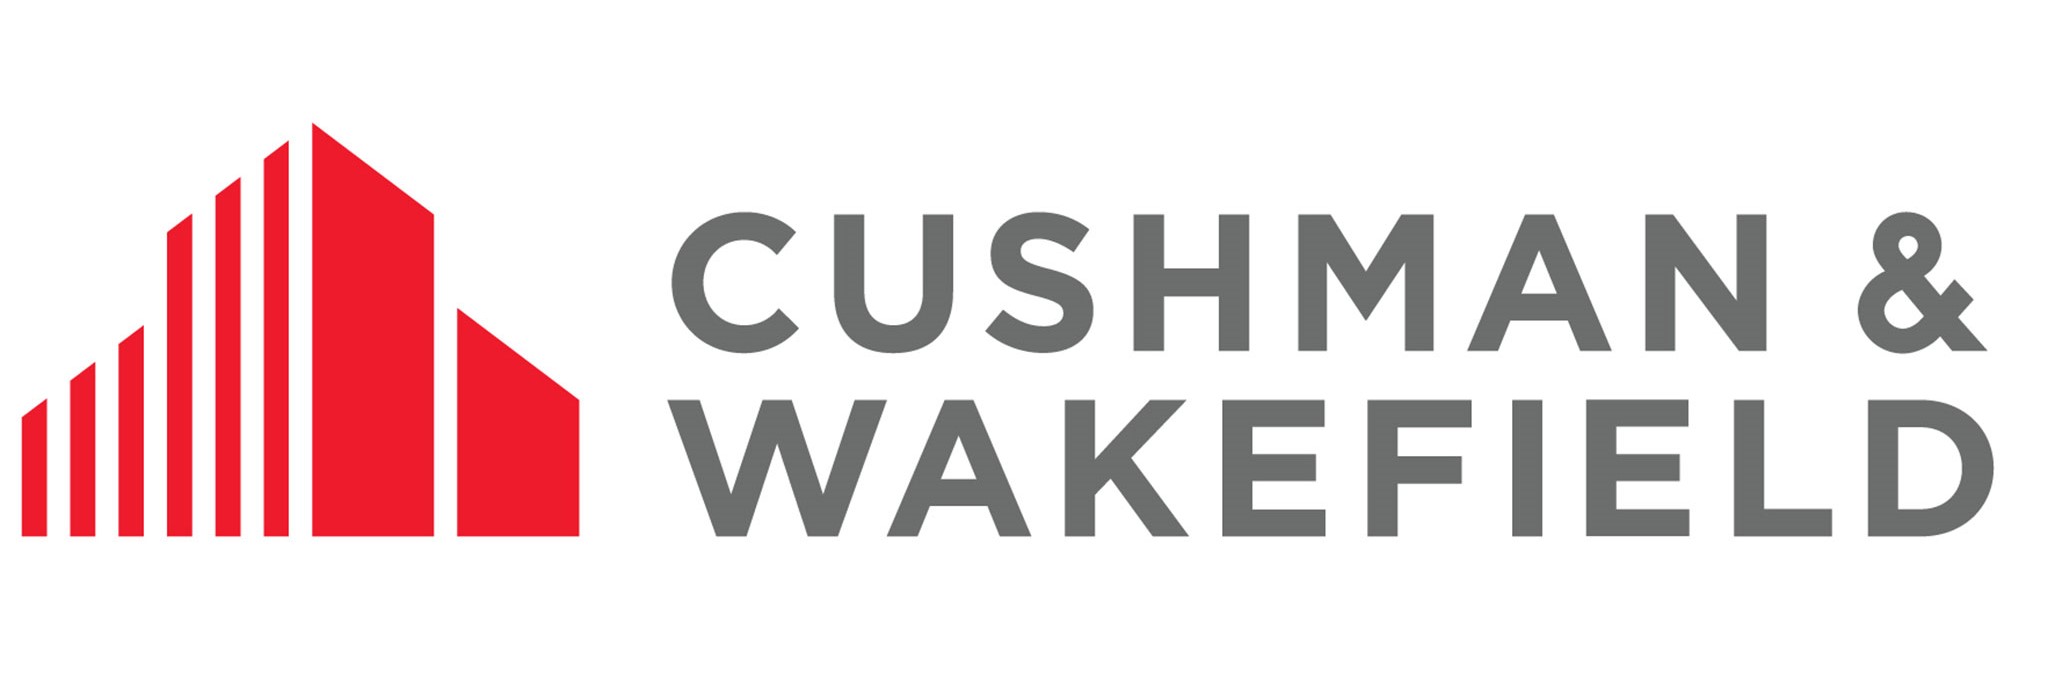 Cushman & Wakefield company logo